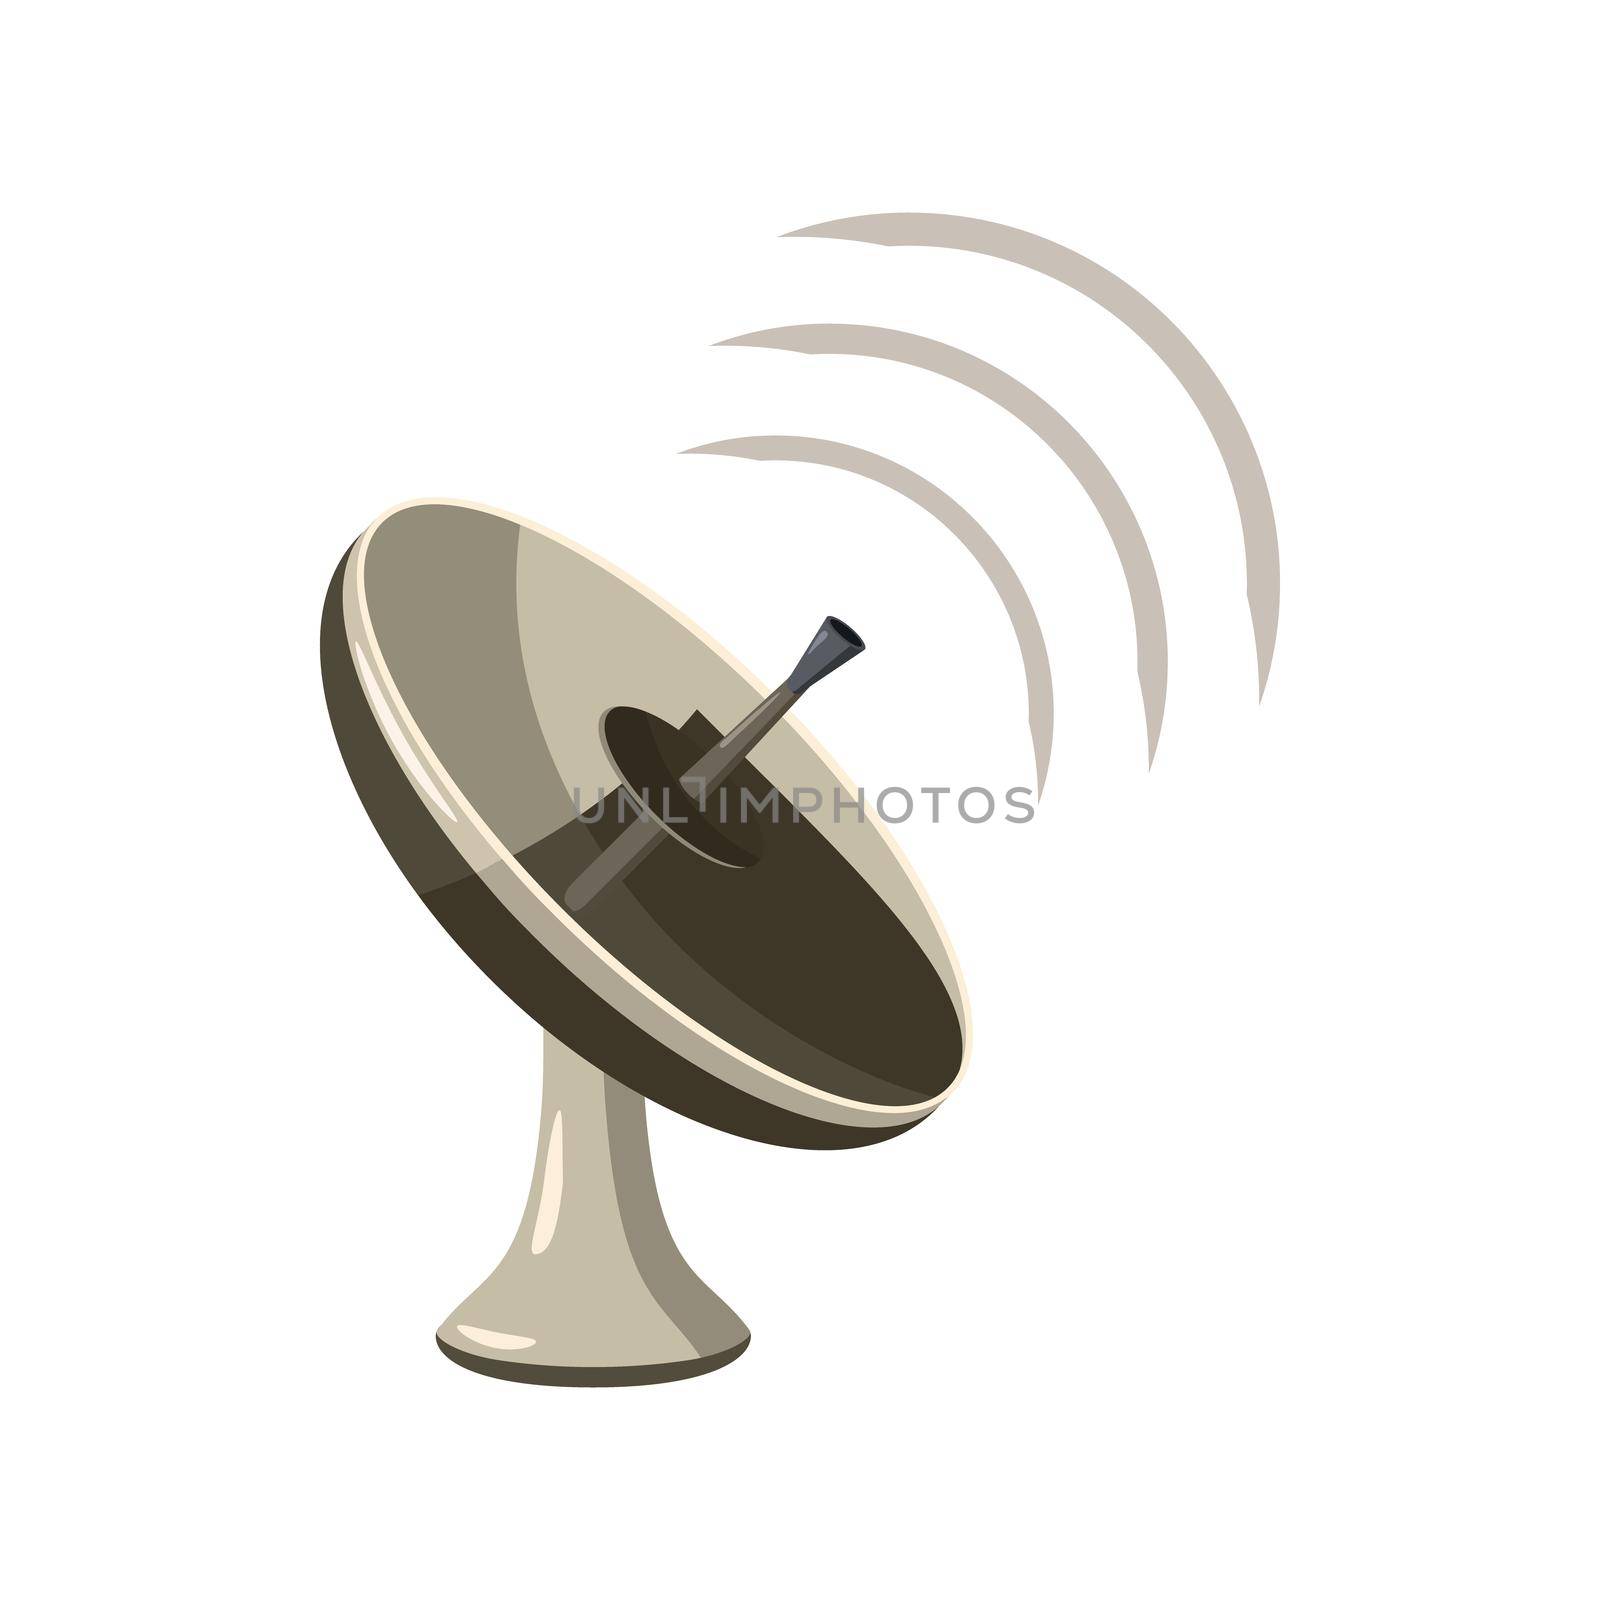 Radar icon in cartoon style isolated on white background. Satellite dish tv technology icon